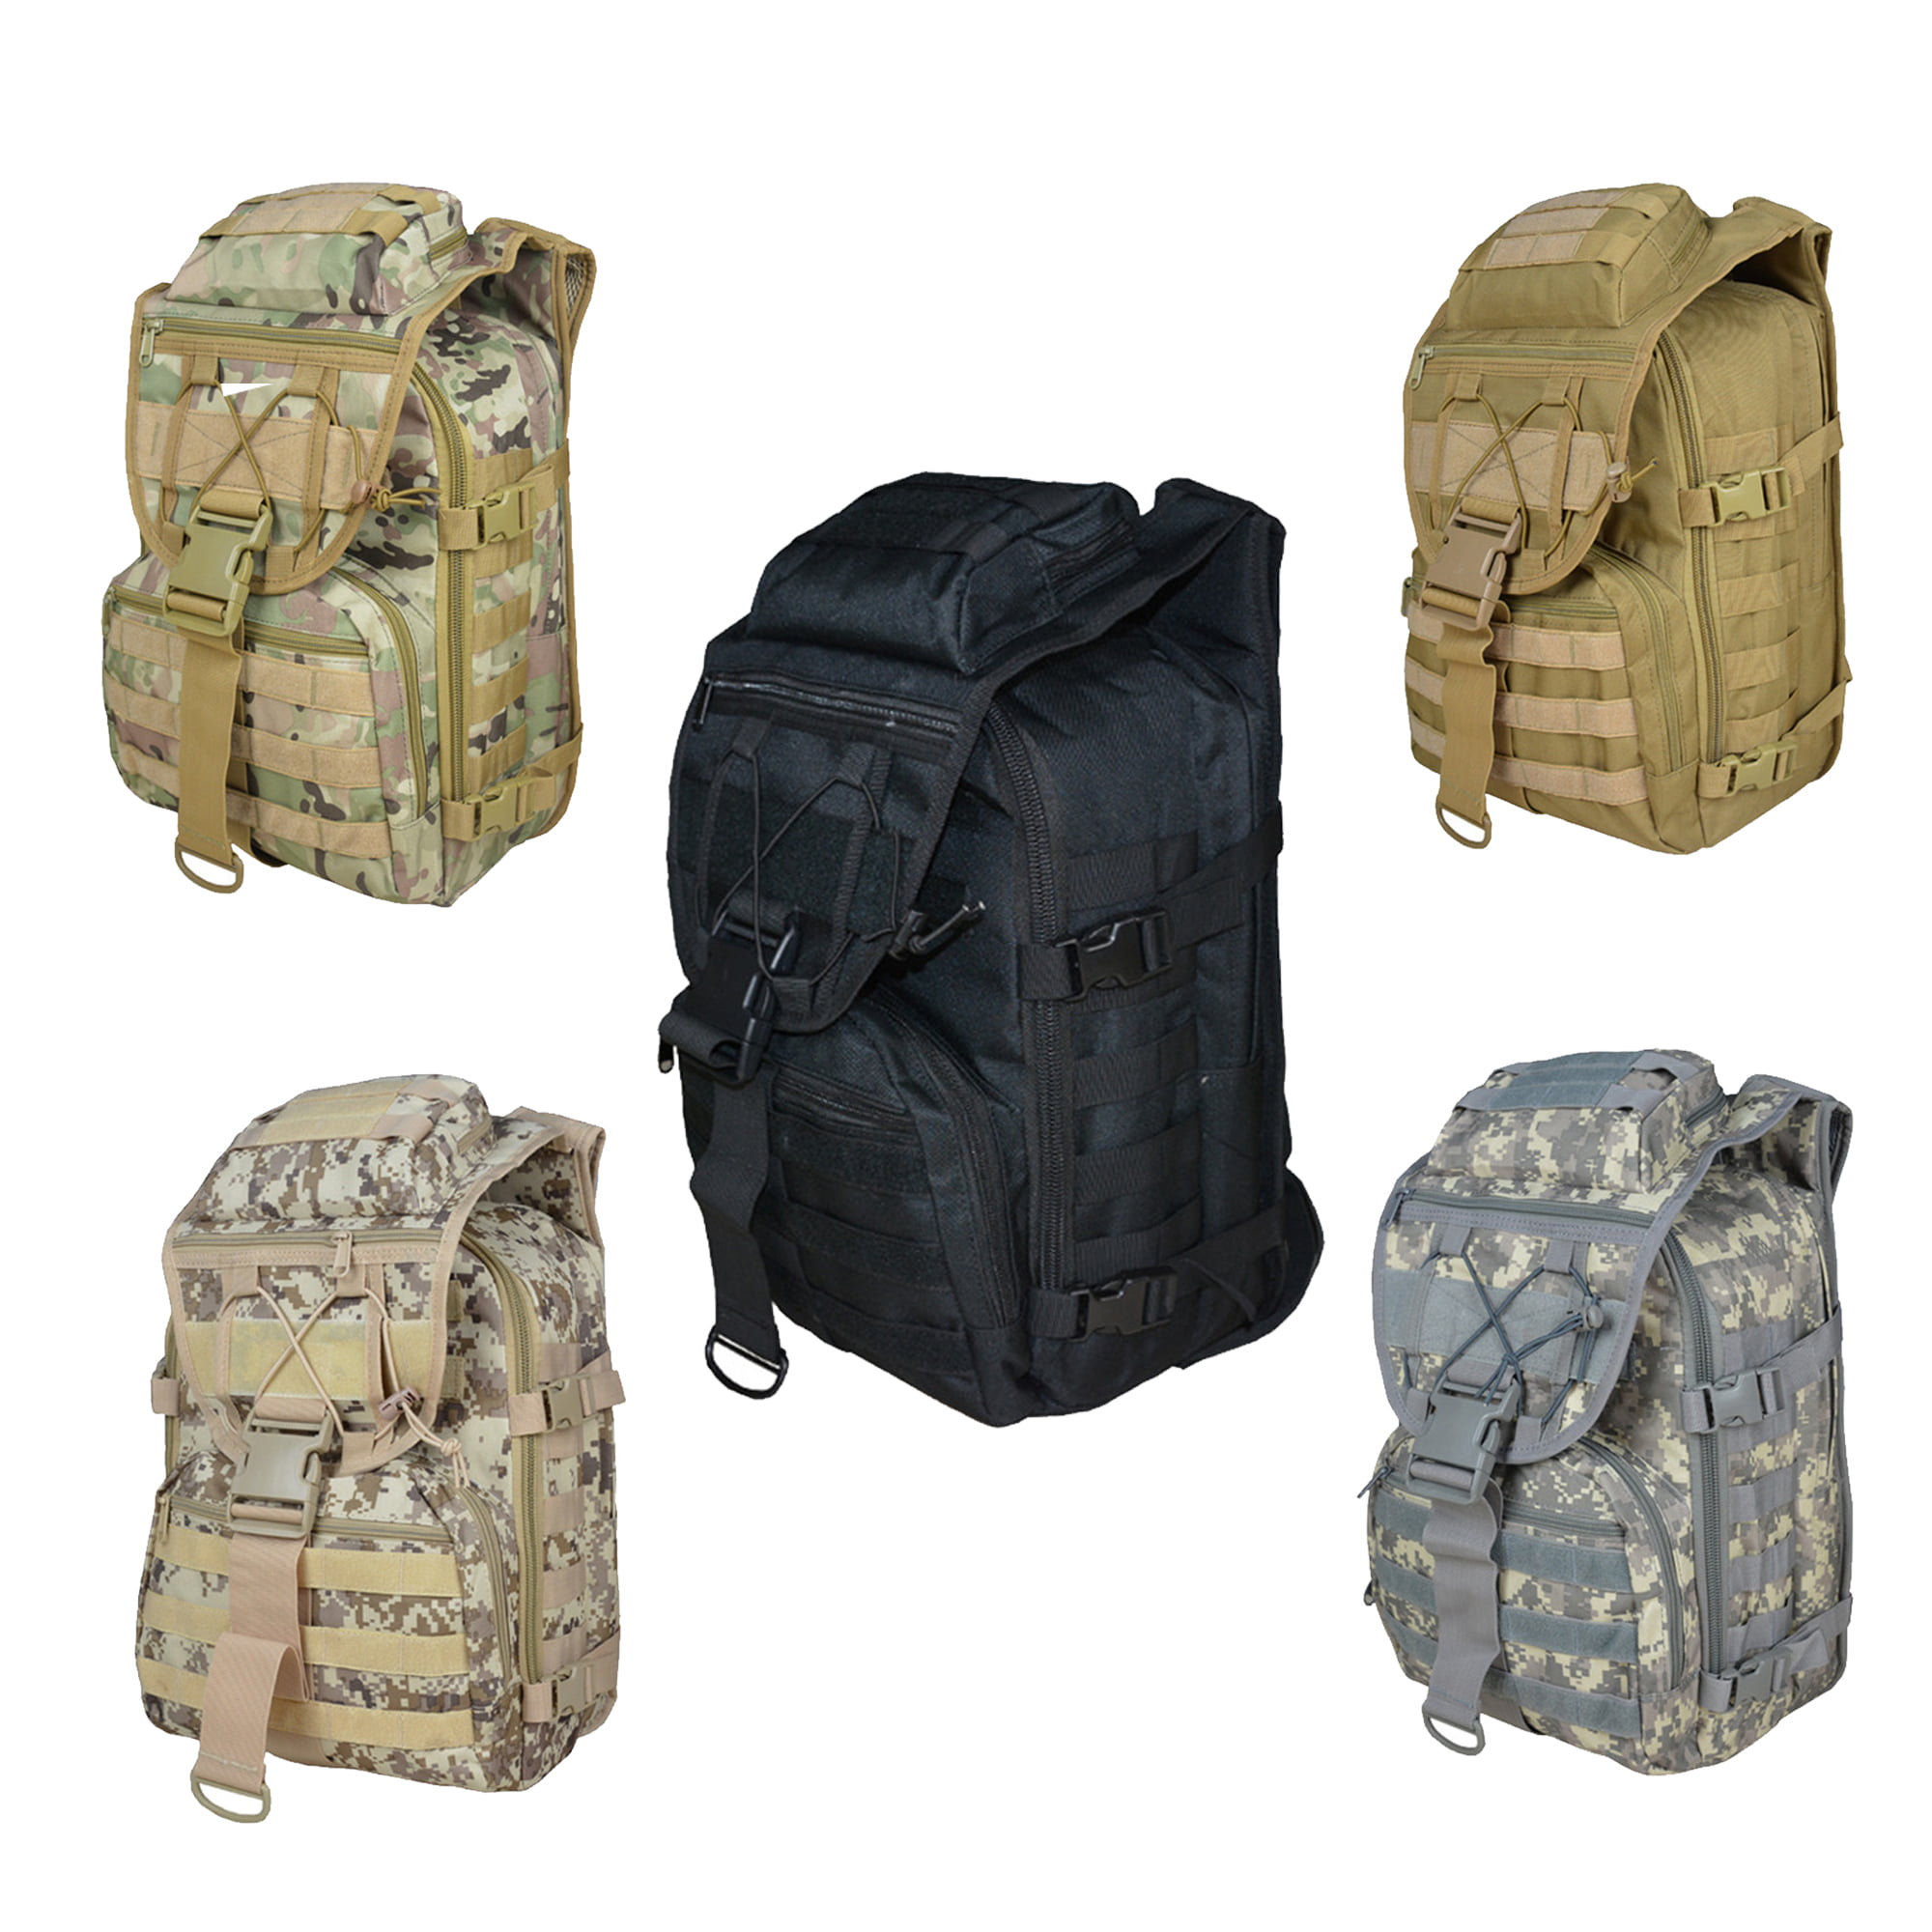 35L Molle Tactical Military Assault Backpack Camping Hiking Bag Rucksack Black 